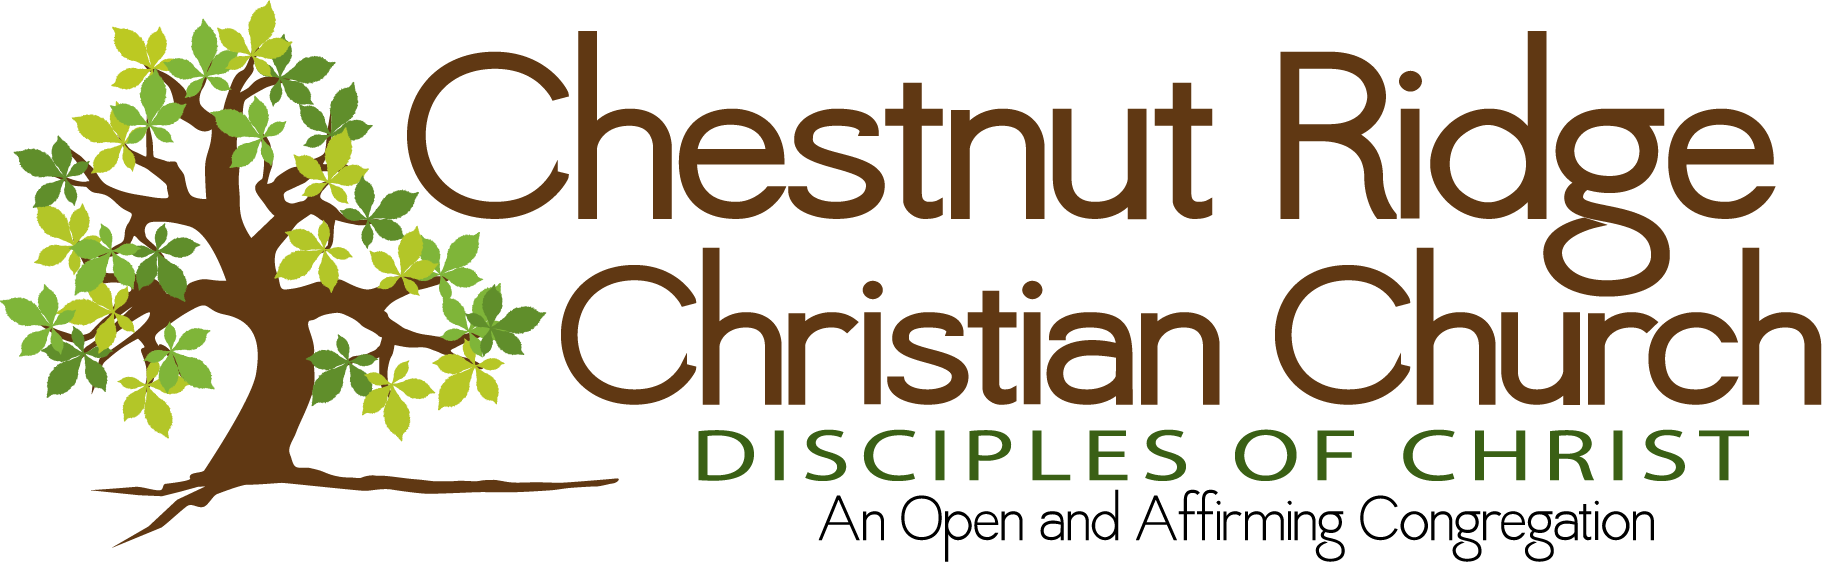 Chestnut Ridge Christian Church